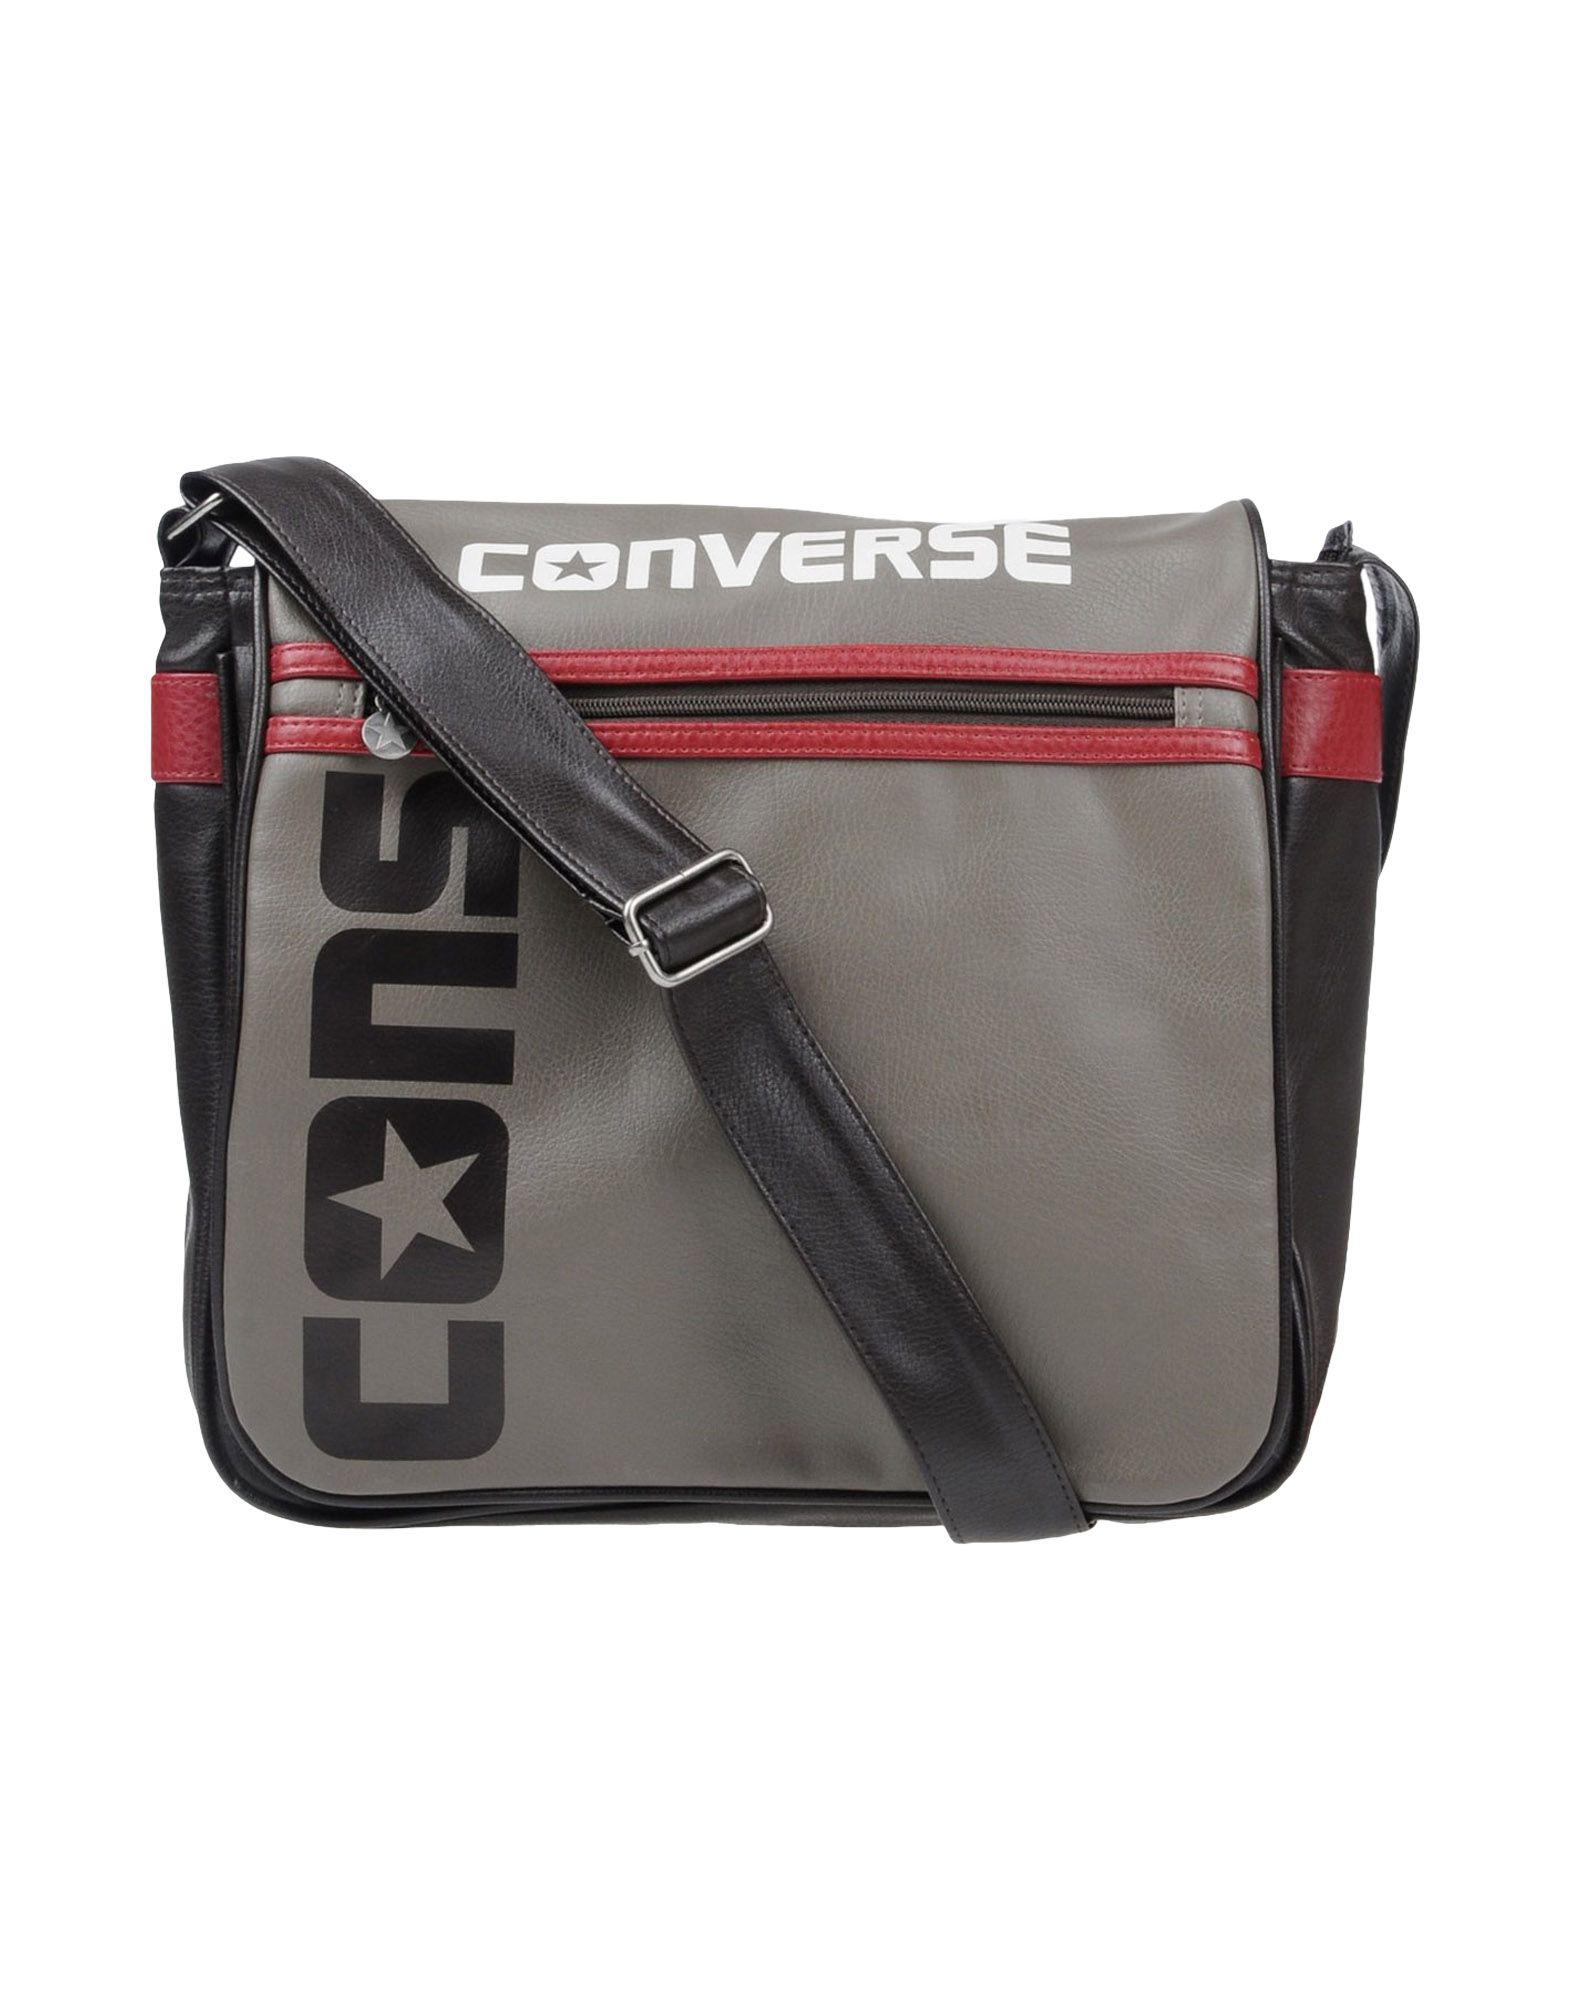 converse cross bag